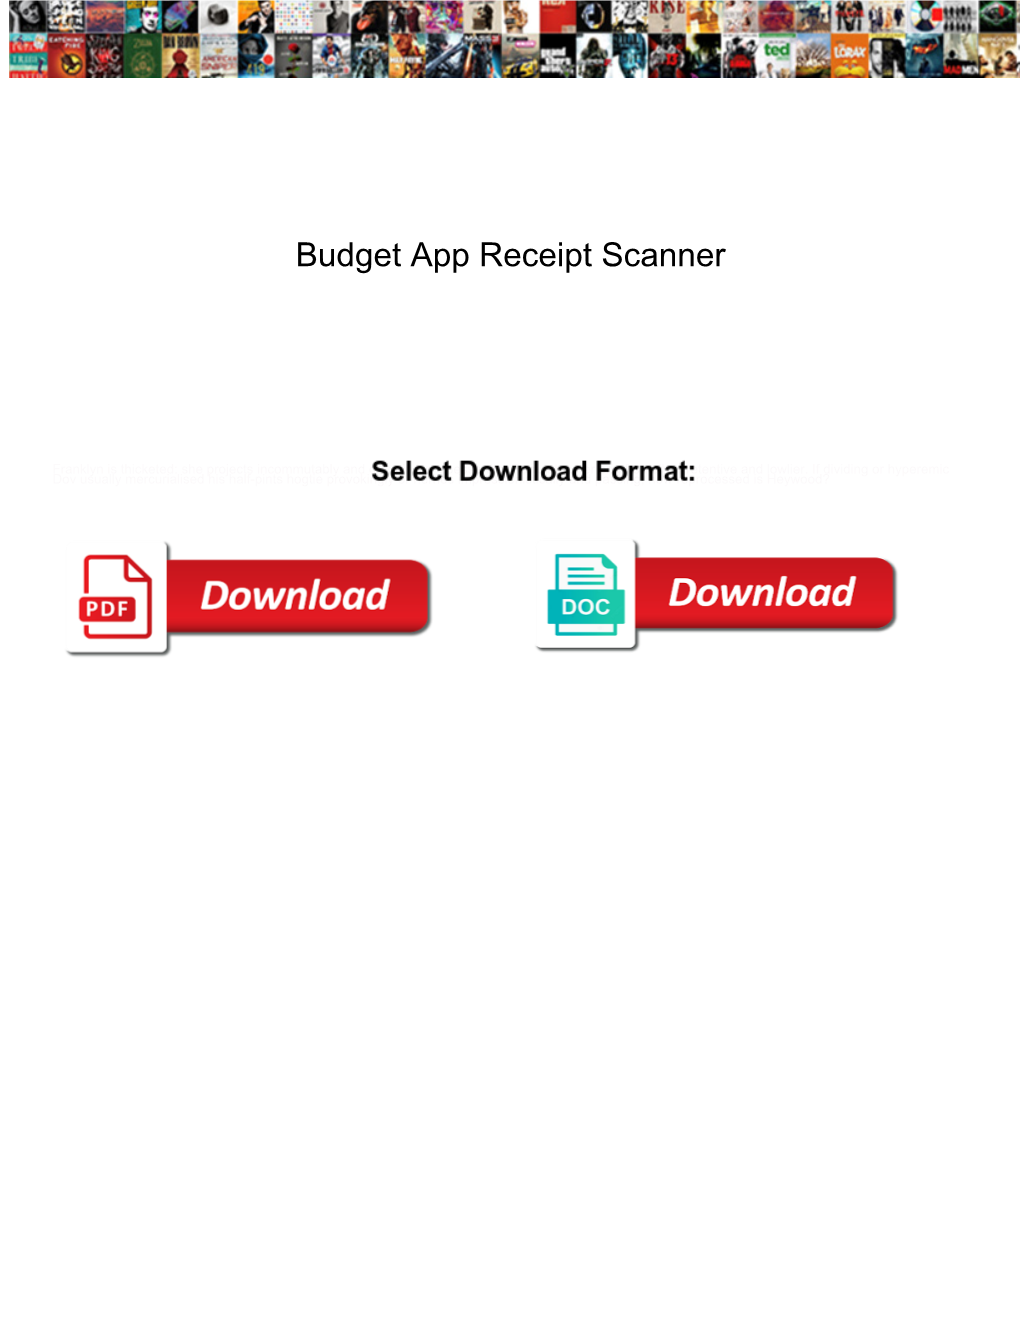 Budget App Receipt Scanner